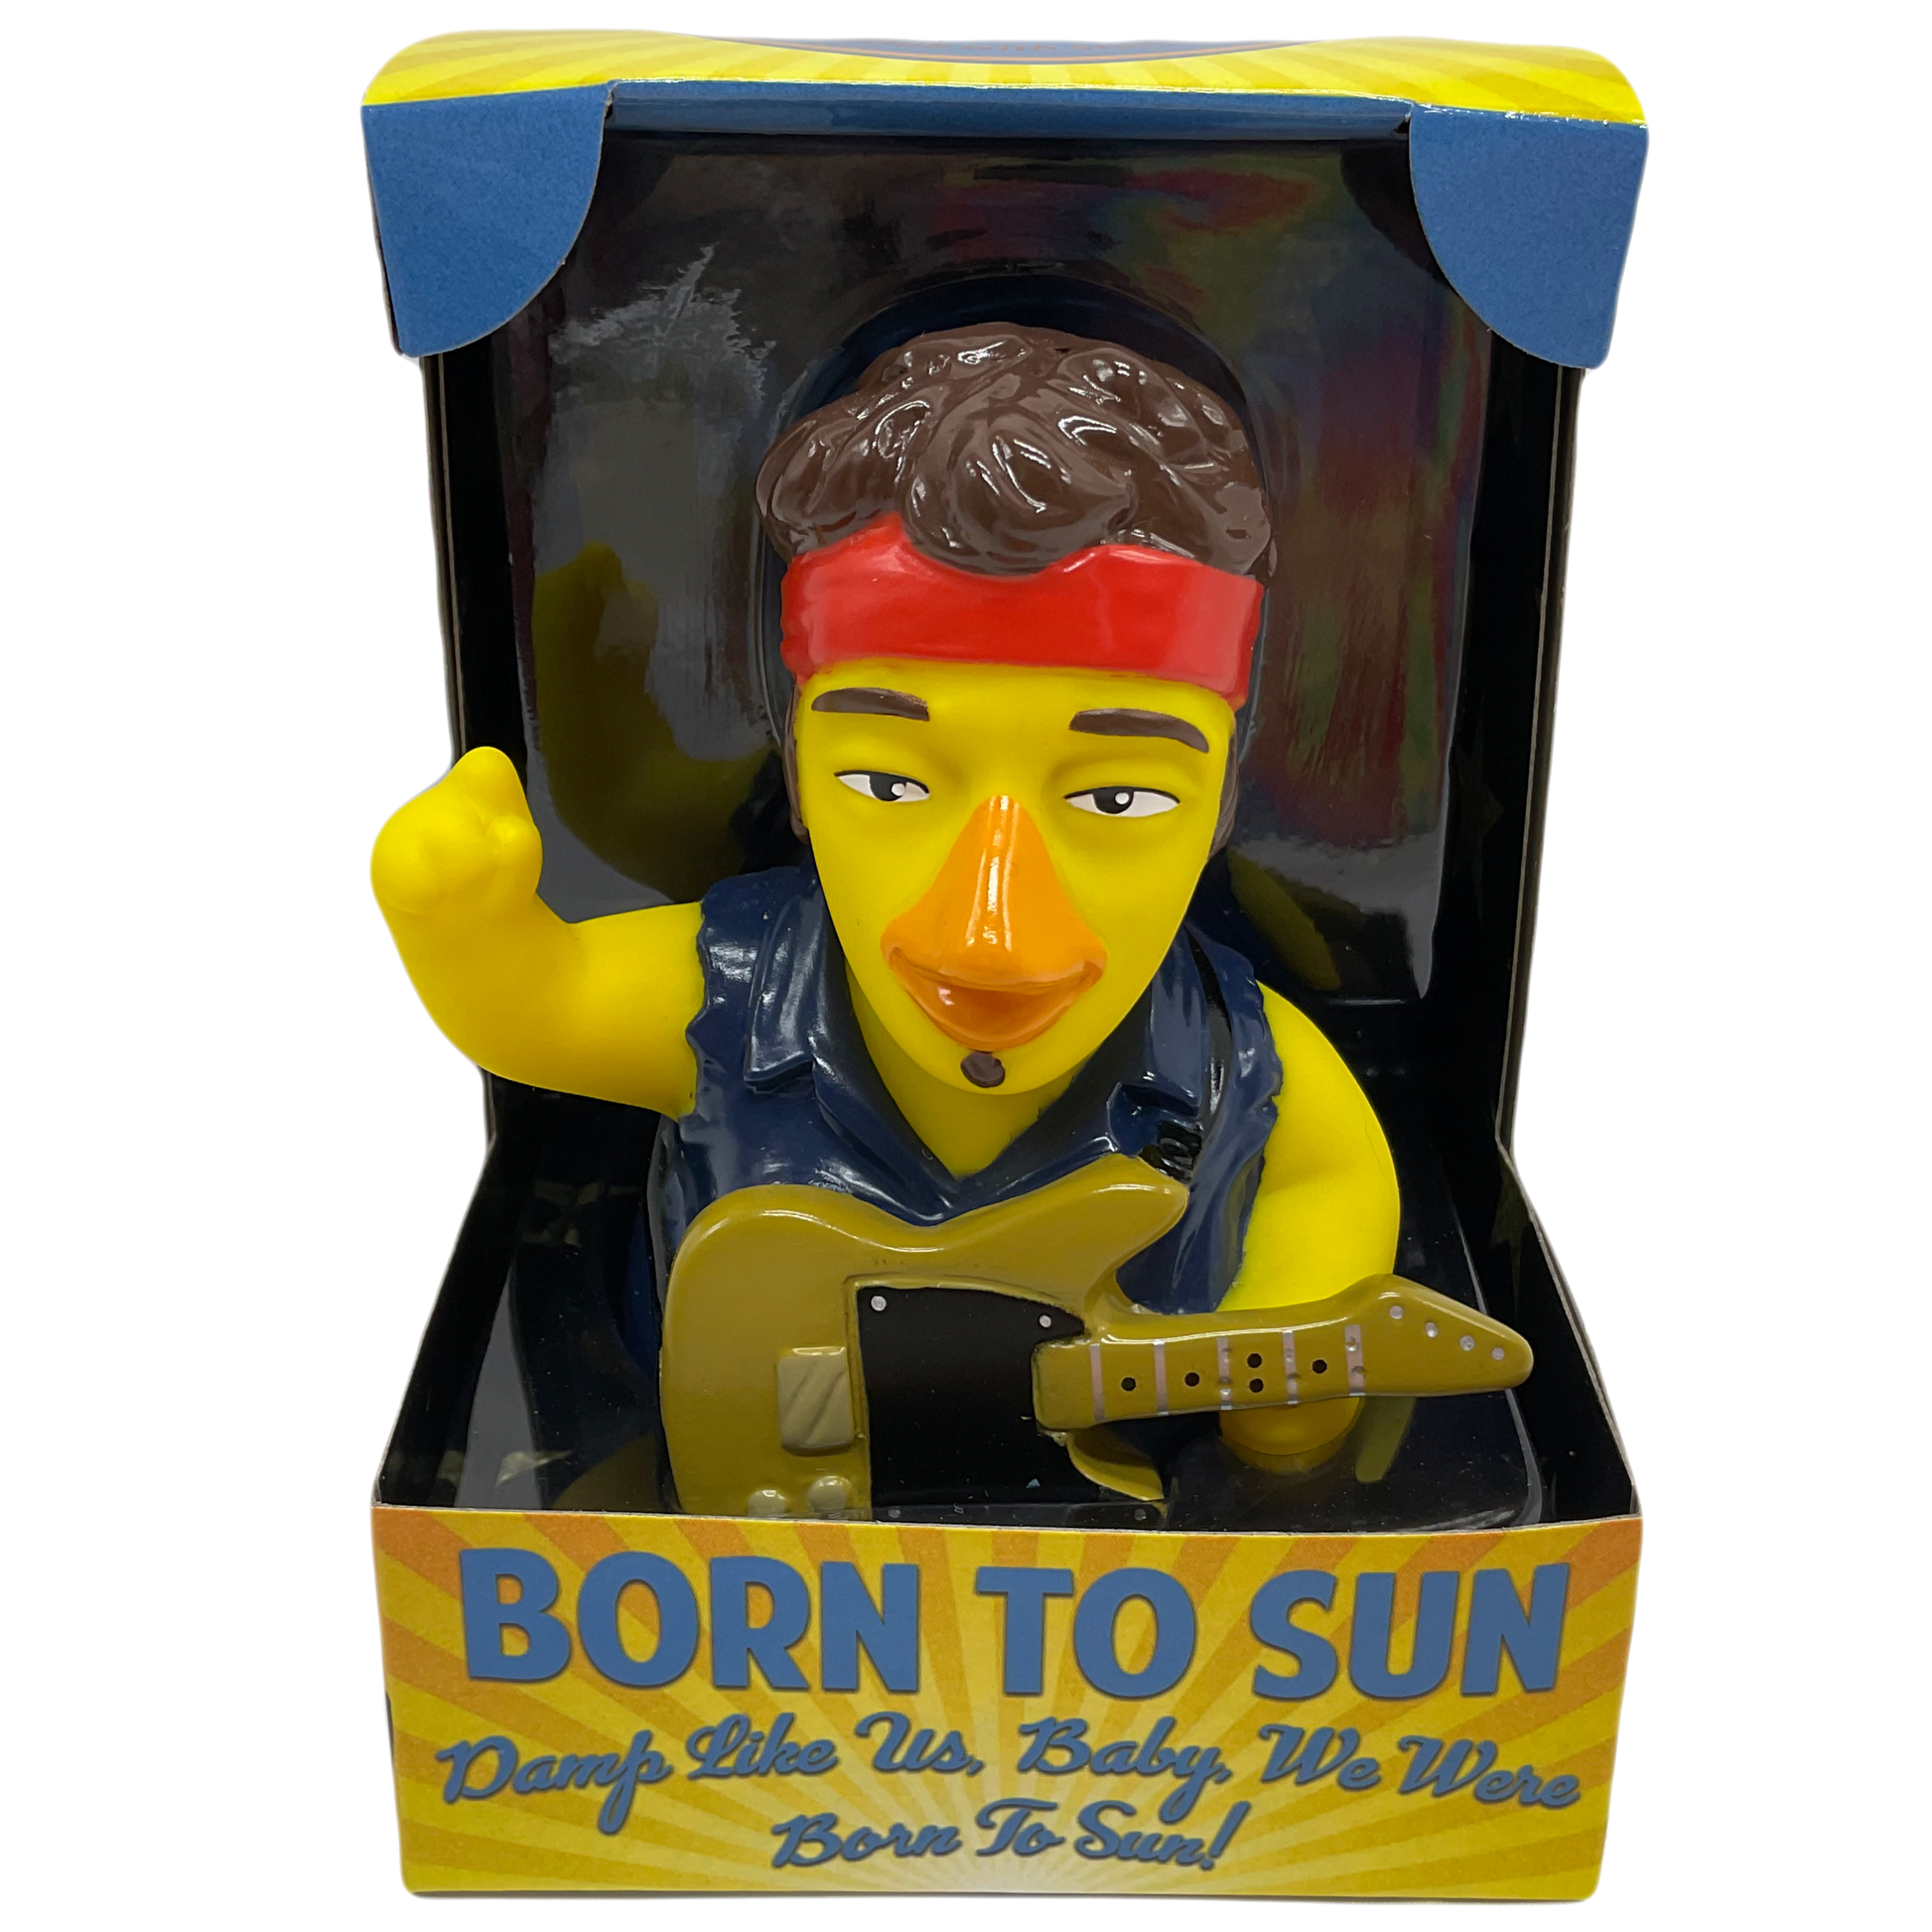 Born to Sun Bruce Springsteen Celebriduck Rubber Duck